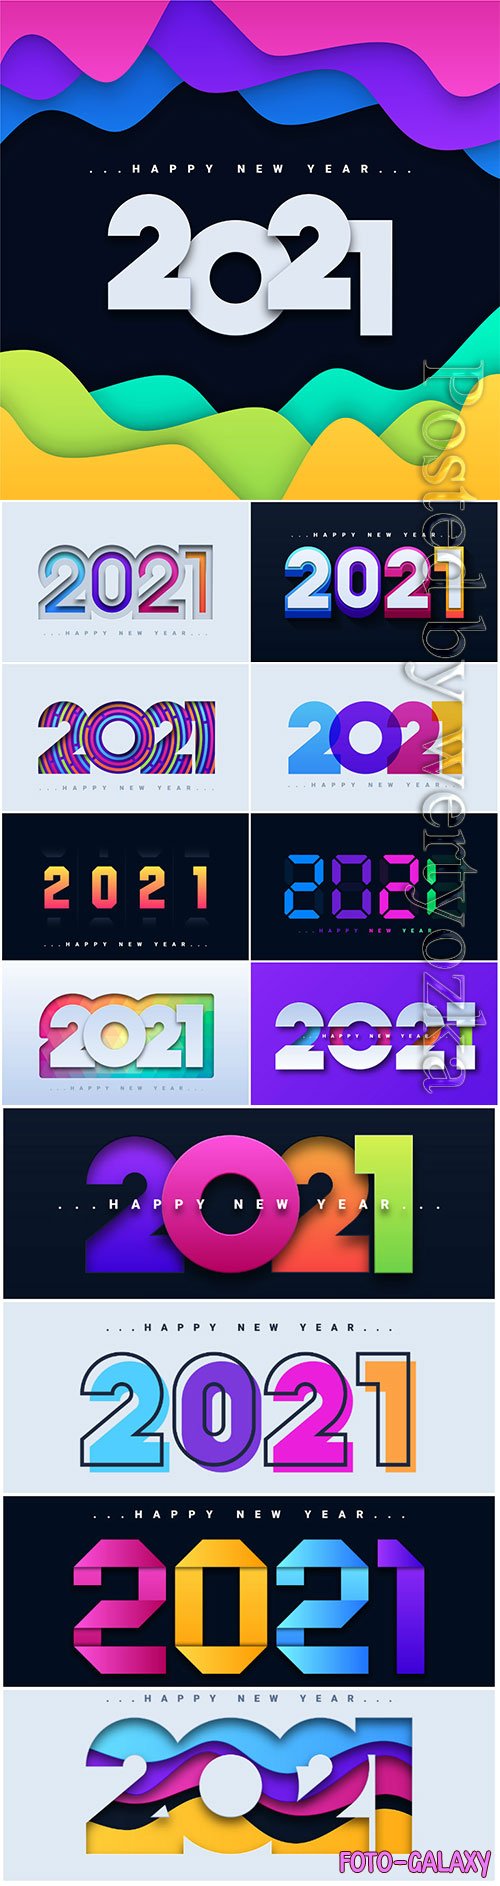 Modern happy 2021 new year greeting card